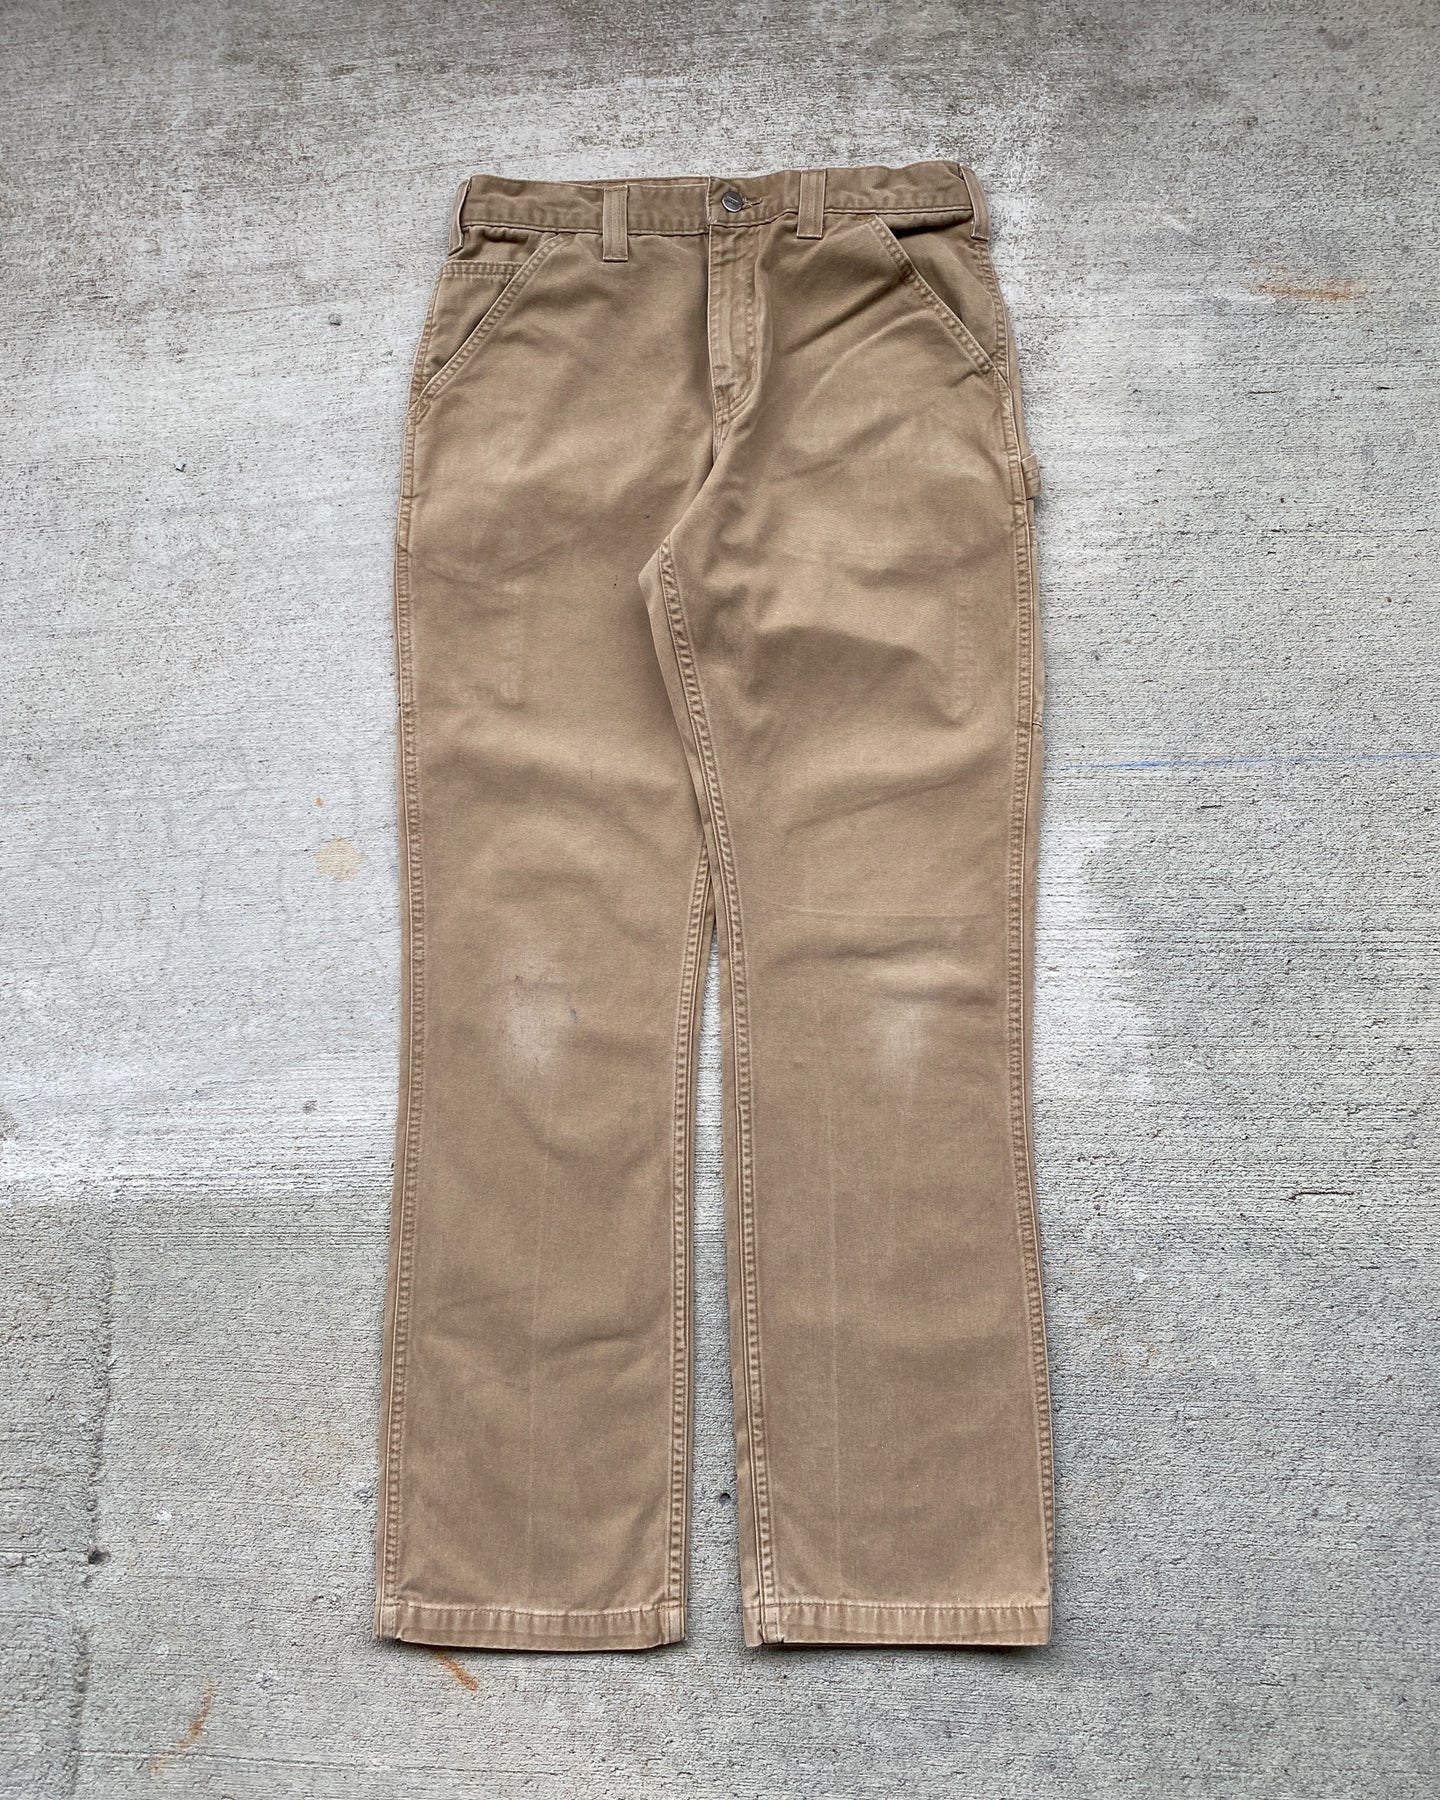 Carhartt Cotton Camel Brown Work Pants - Size 33 x 34